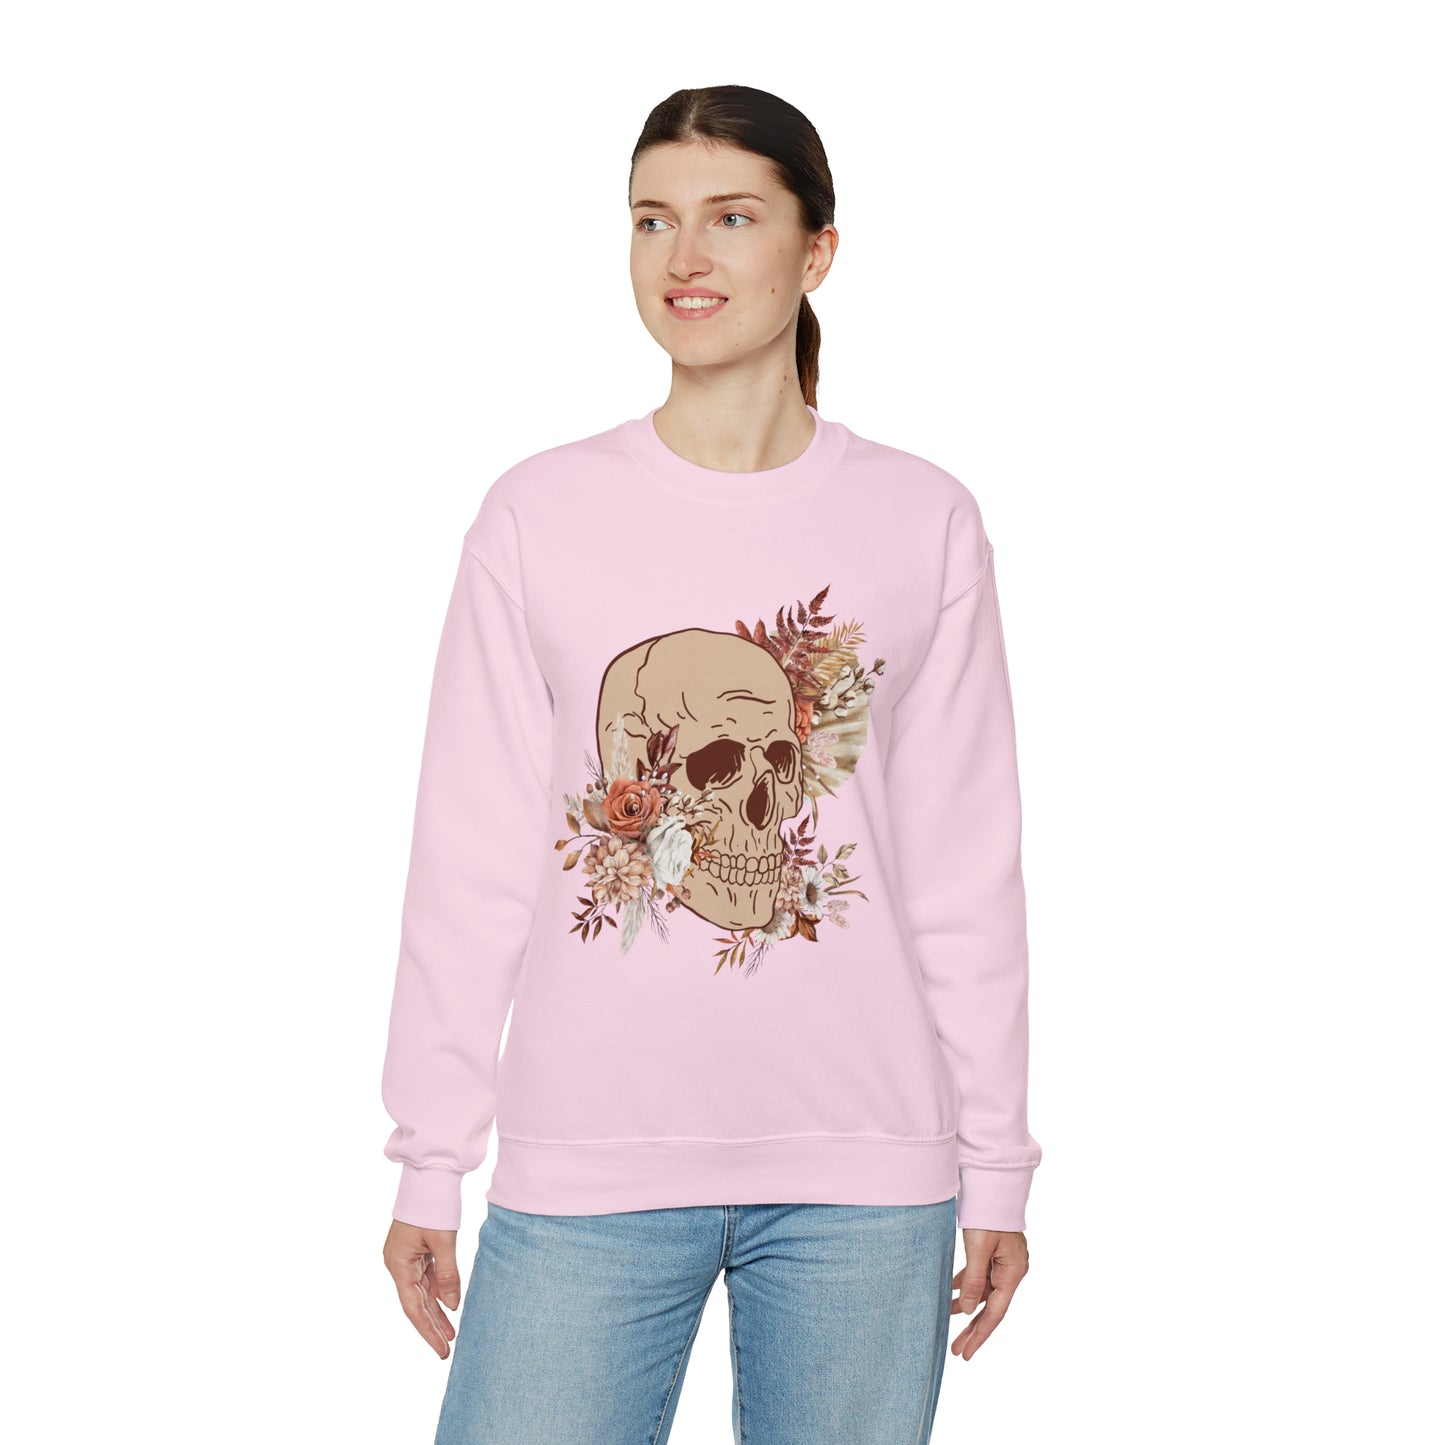 Unisex Vintage Skull and Flower Heavy Blend Crewneck Sweatshirt pink